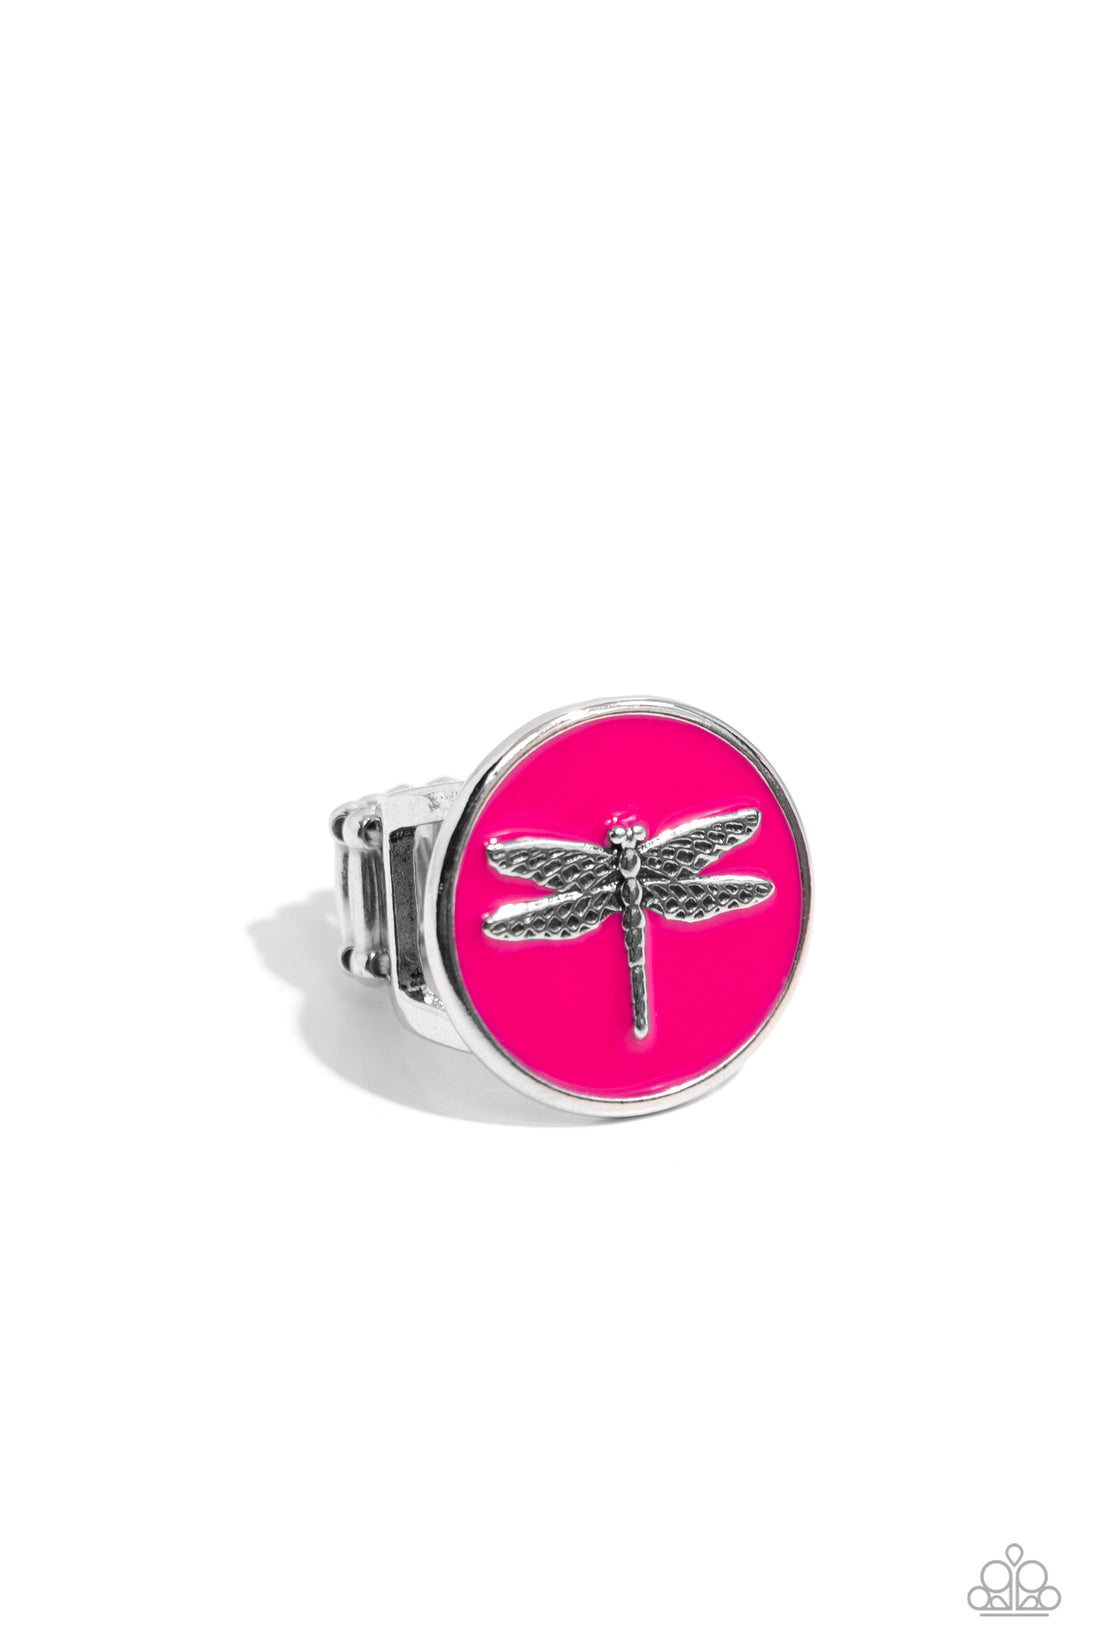 Paparazzi - Debonair Dragonfly - Pink